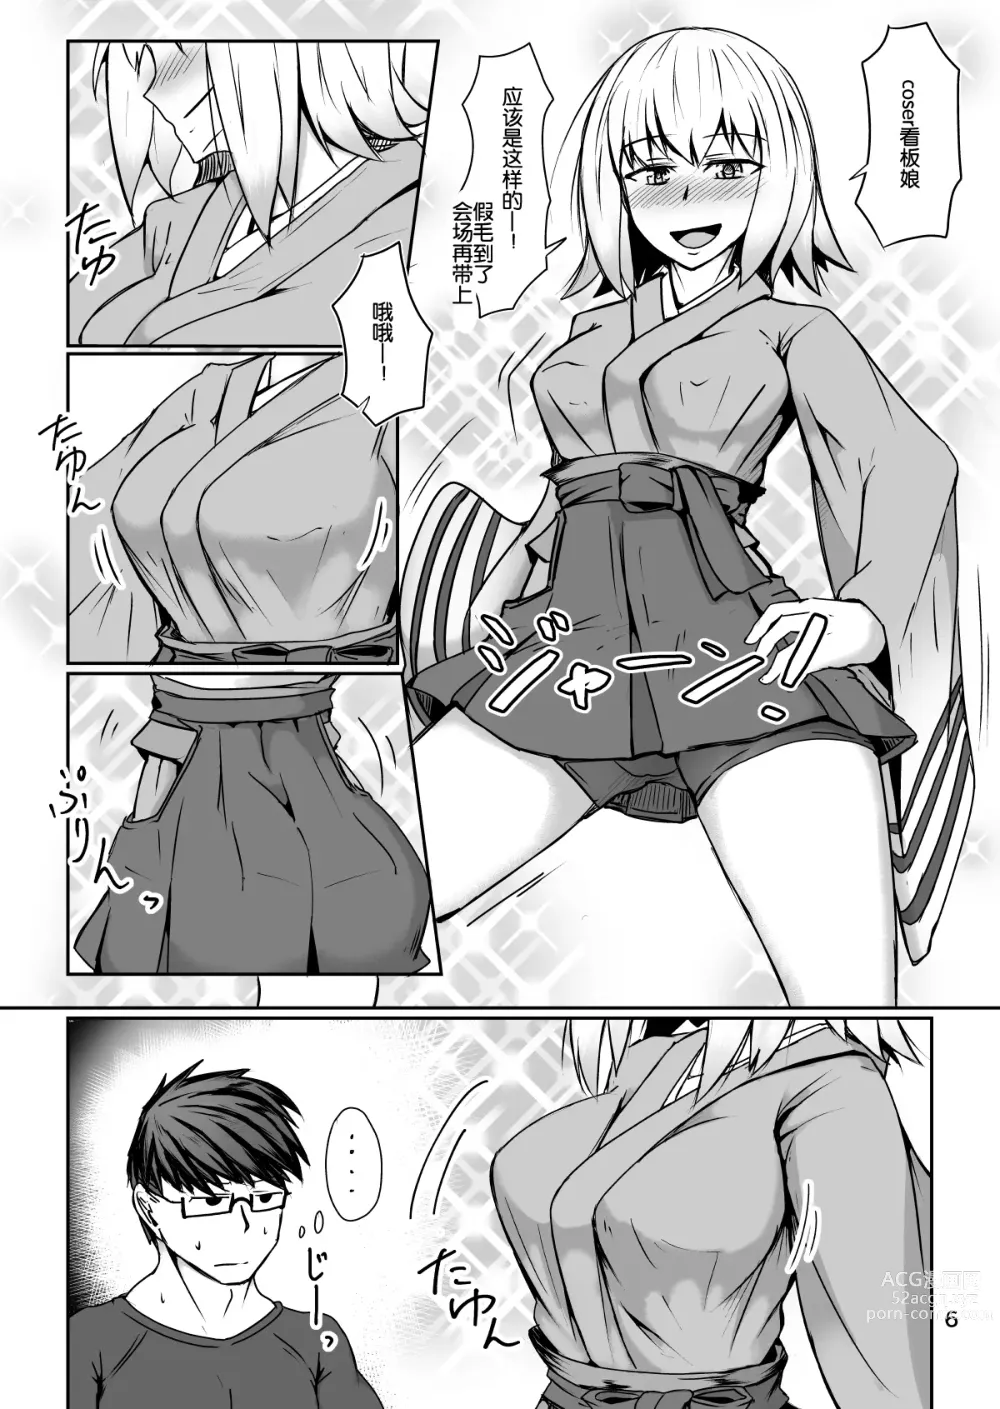 Page 6 of doujinshi Cosplay Uriko no Otomodachi: Event-zennya sex!